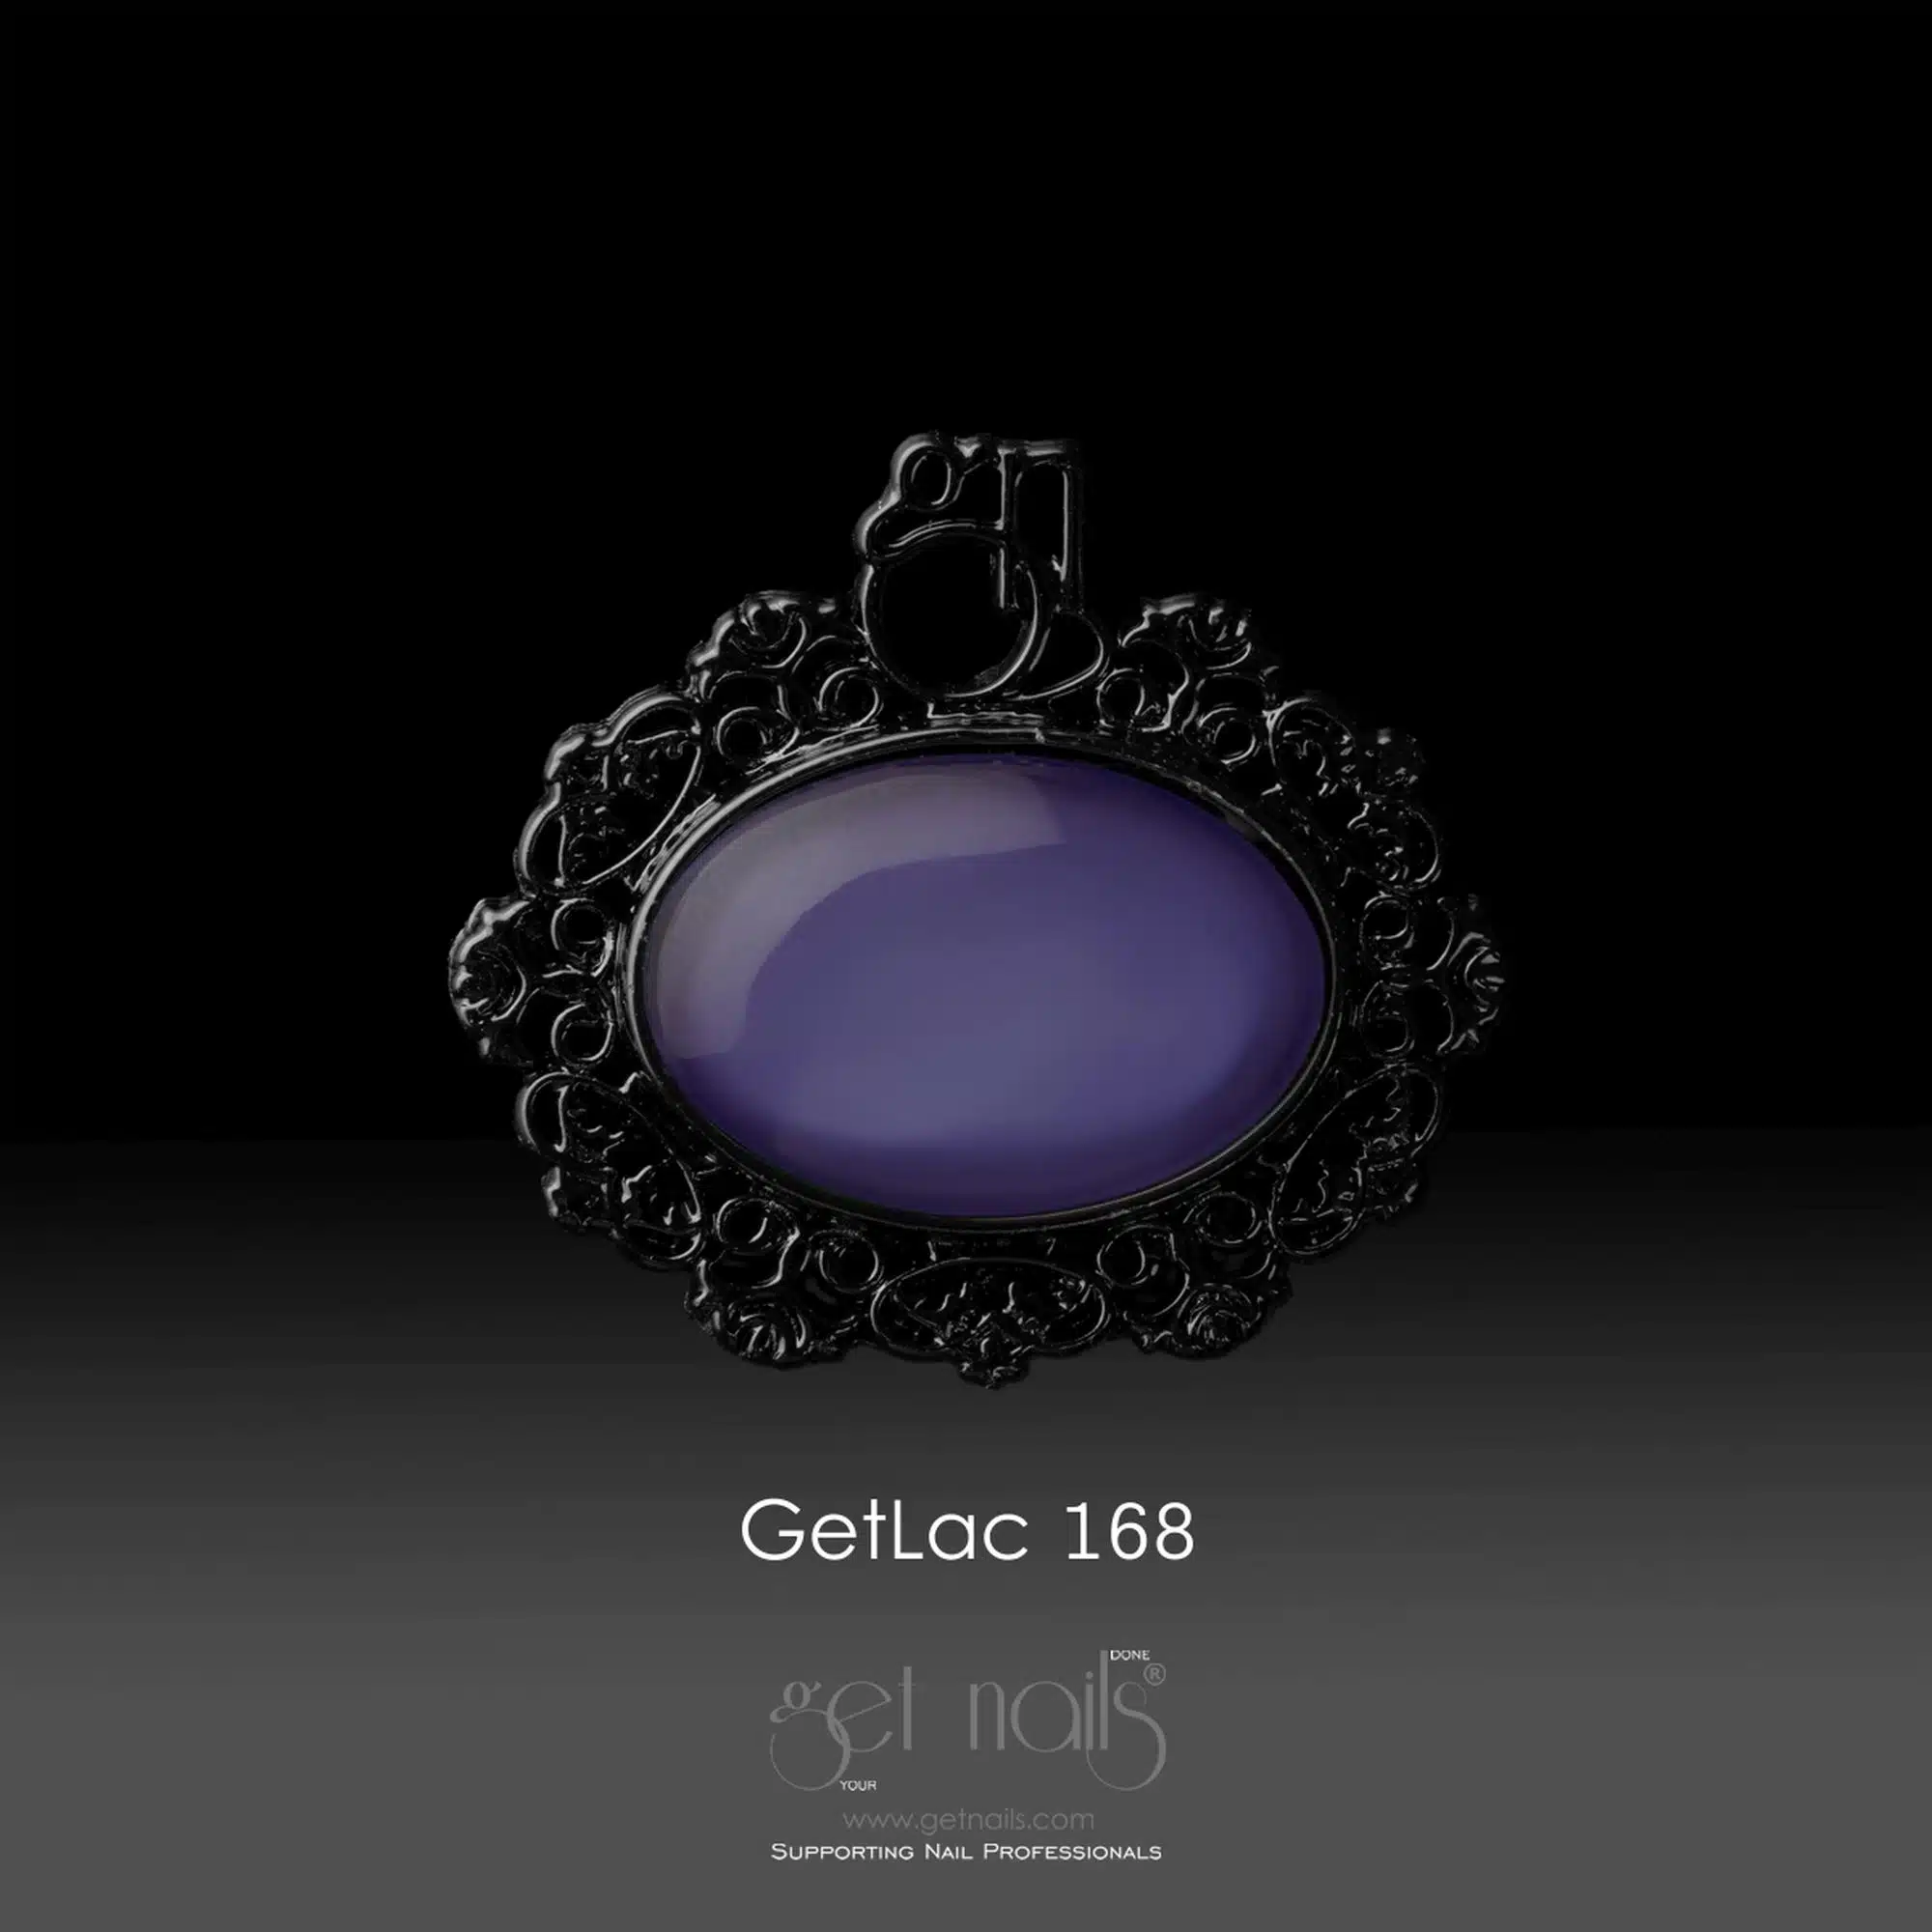 Get Nails Austria - GetLac 168 15g